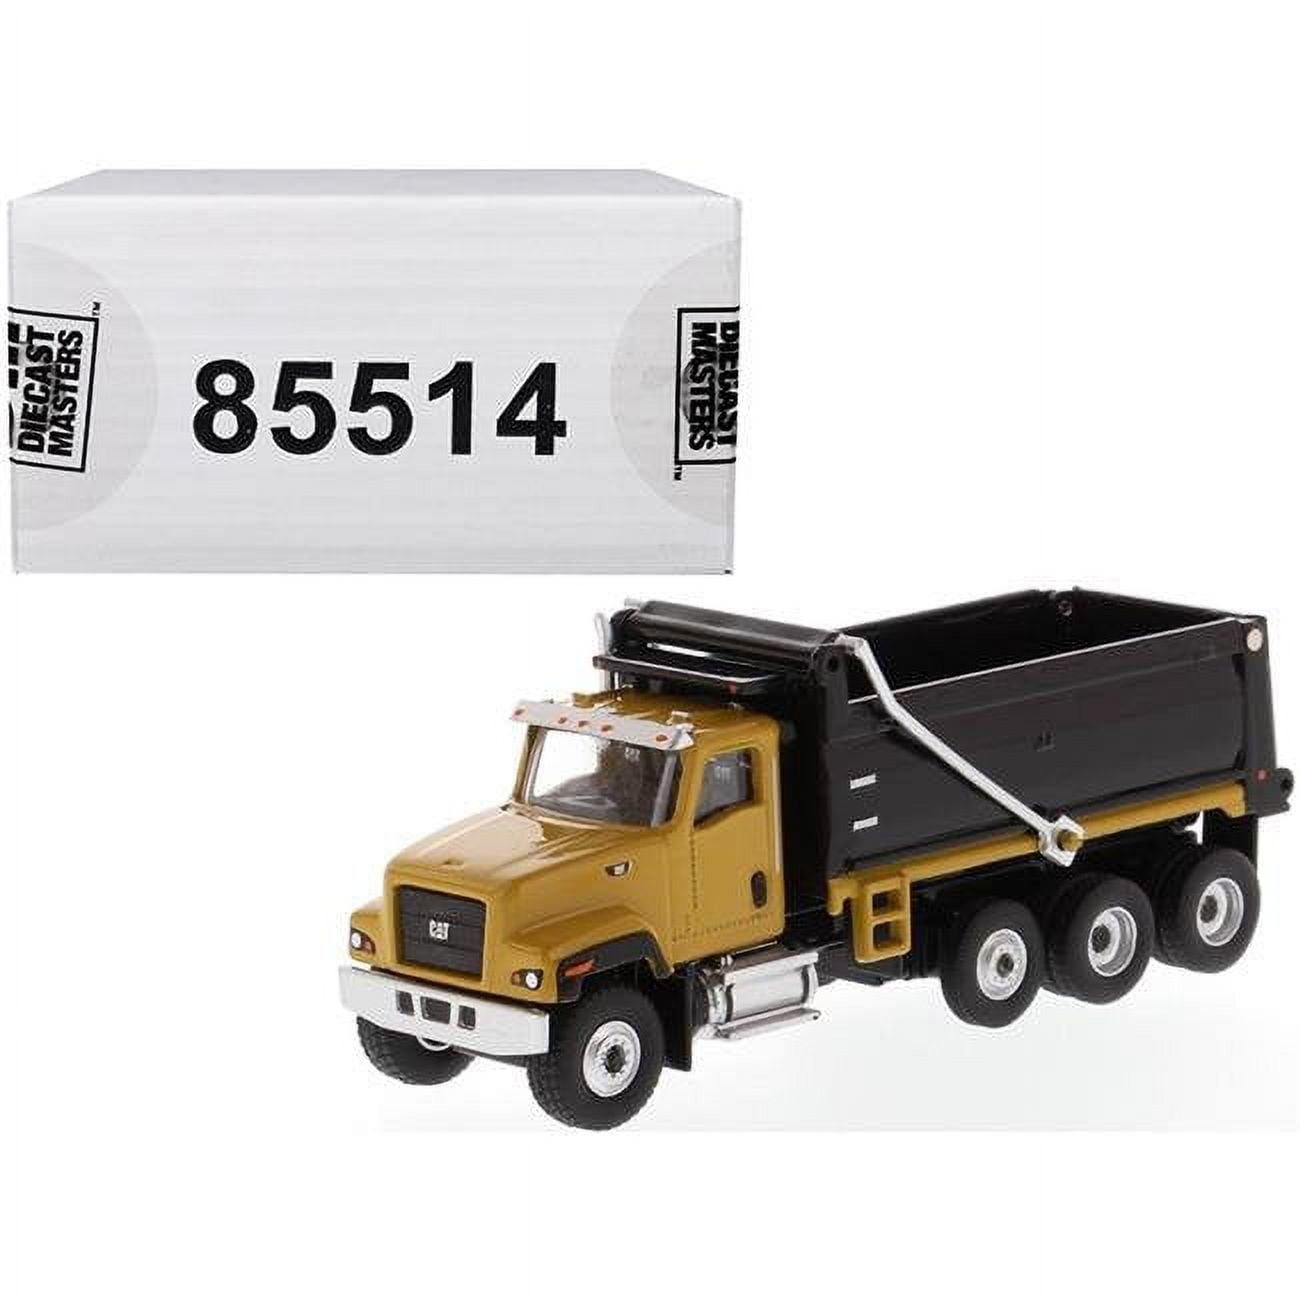 85514 Cat Caterpillar Ct681 Dump Truck High Line Series 1 By 87 Diecast Scale Model, Yellow & Black